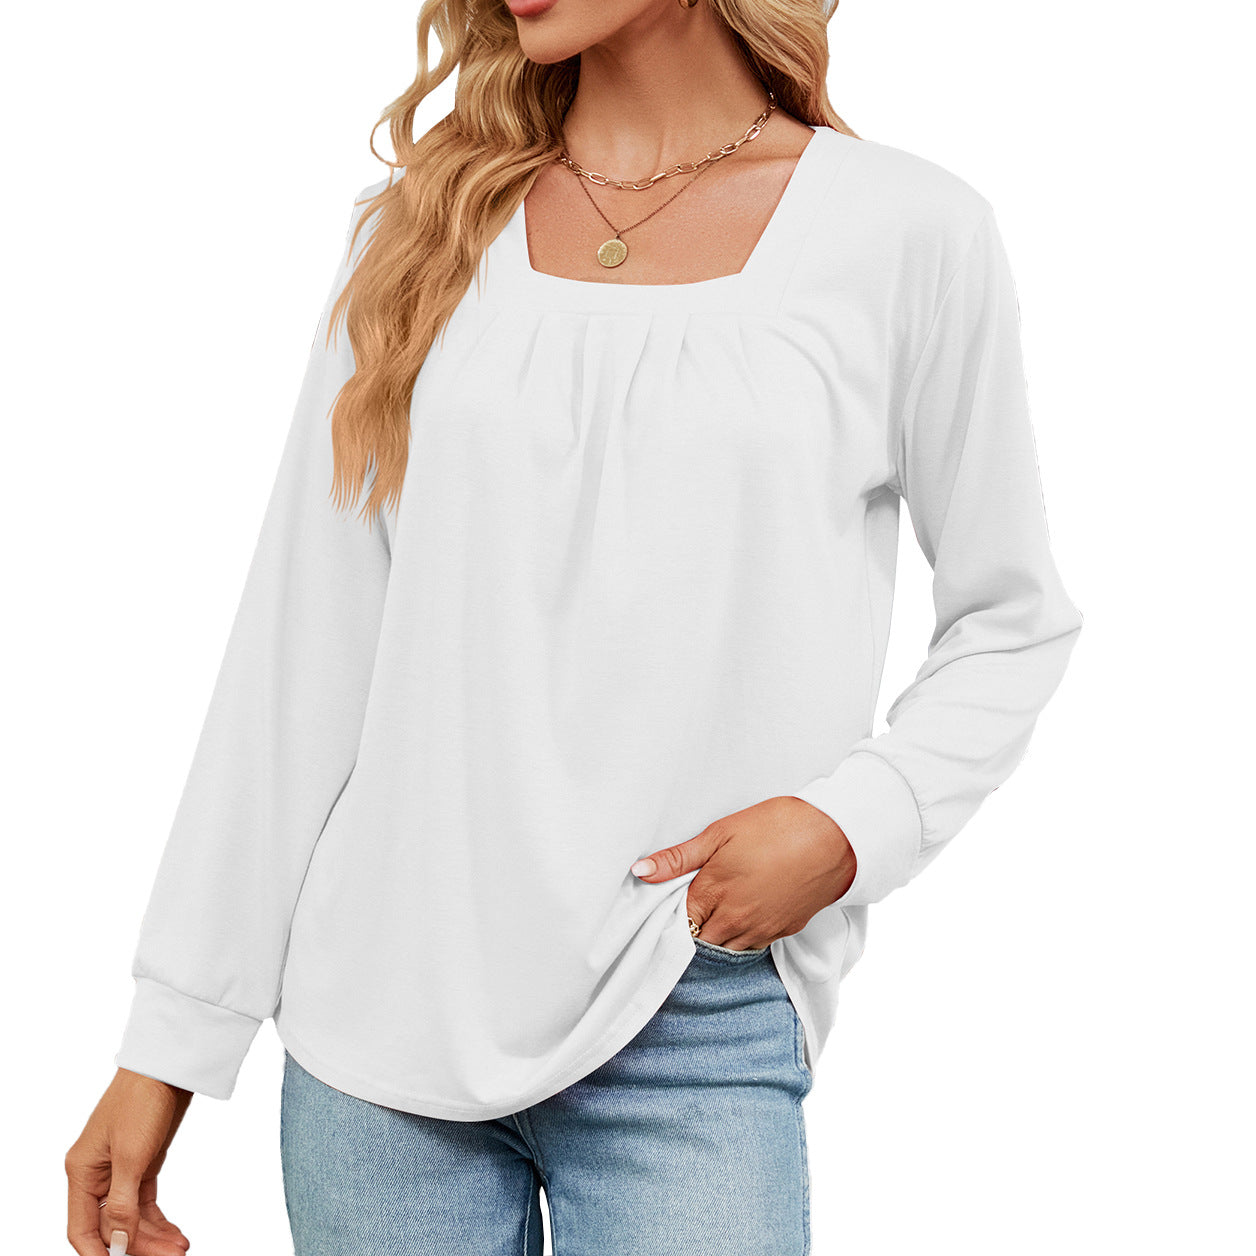 Women's Long Sleeve Loose-fitting T-shirt Top